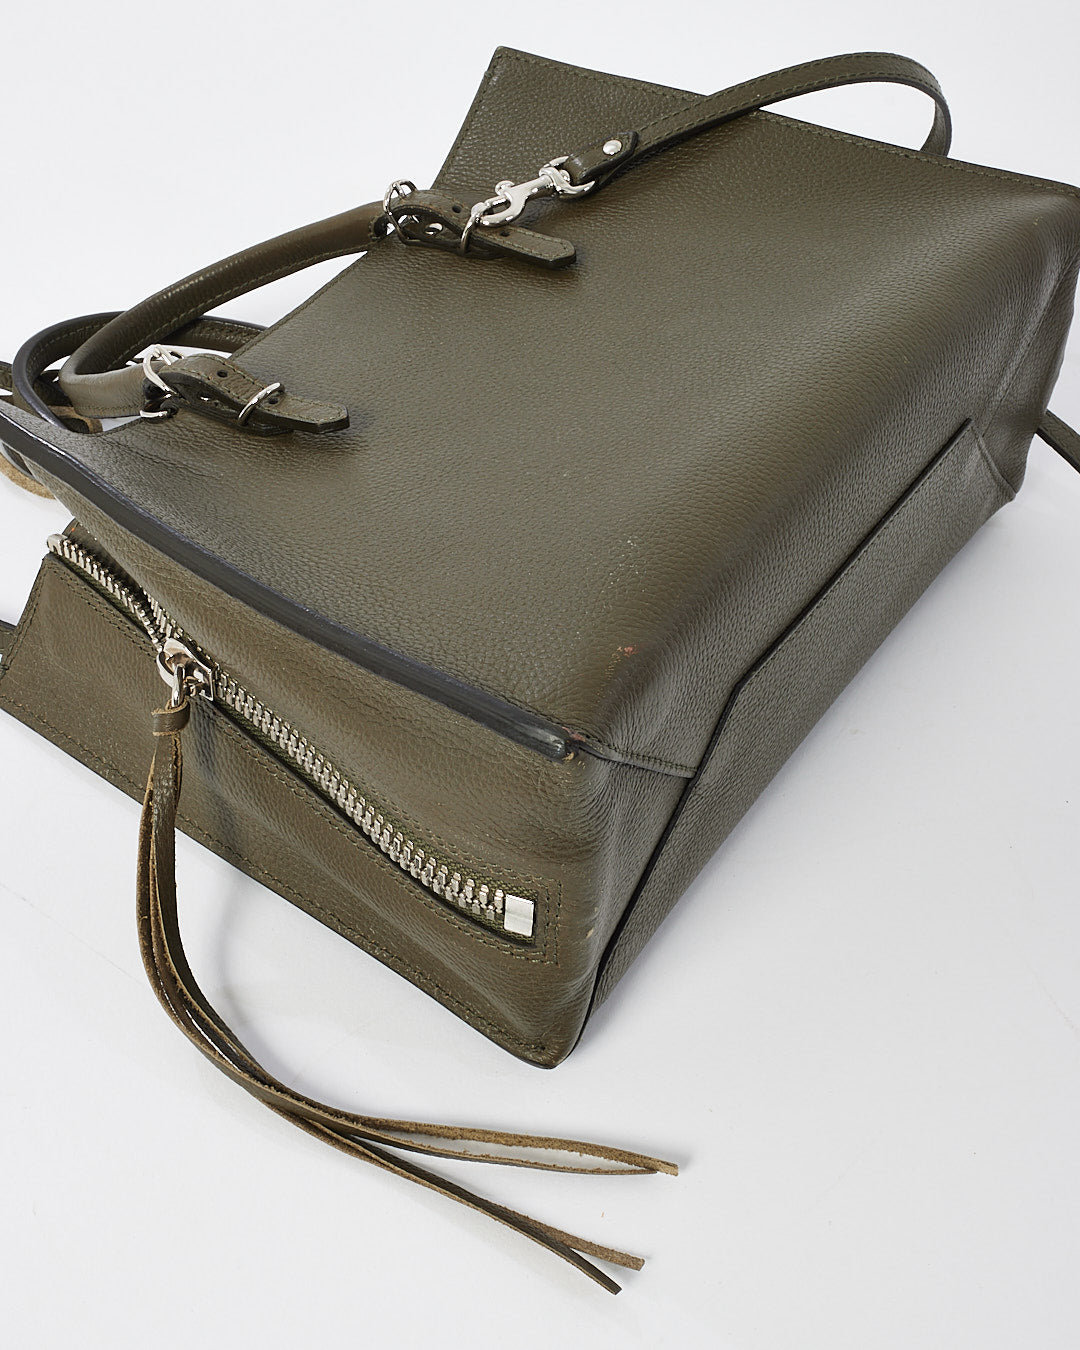 Balenciaga Olive Green Leather Mini Papier A6 Zip Around Tote Bag